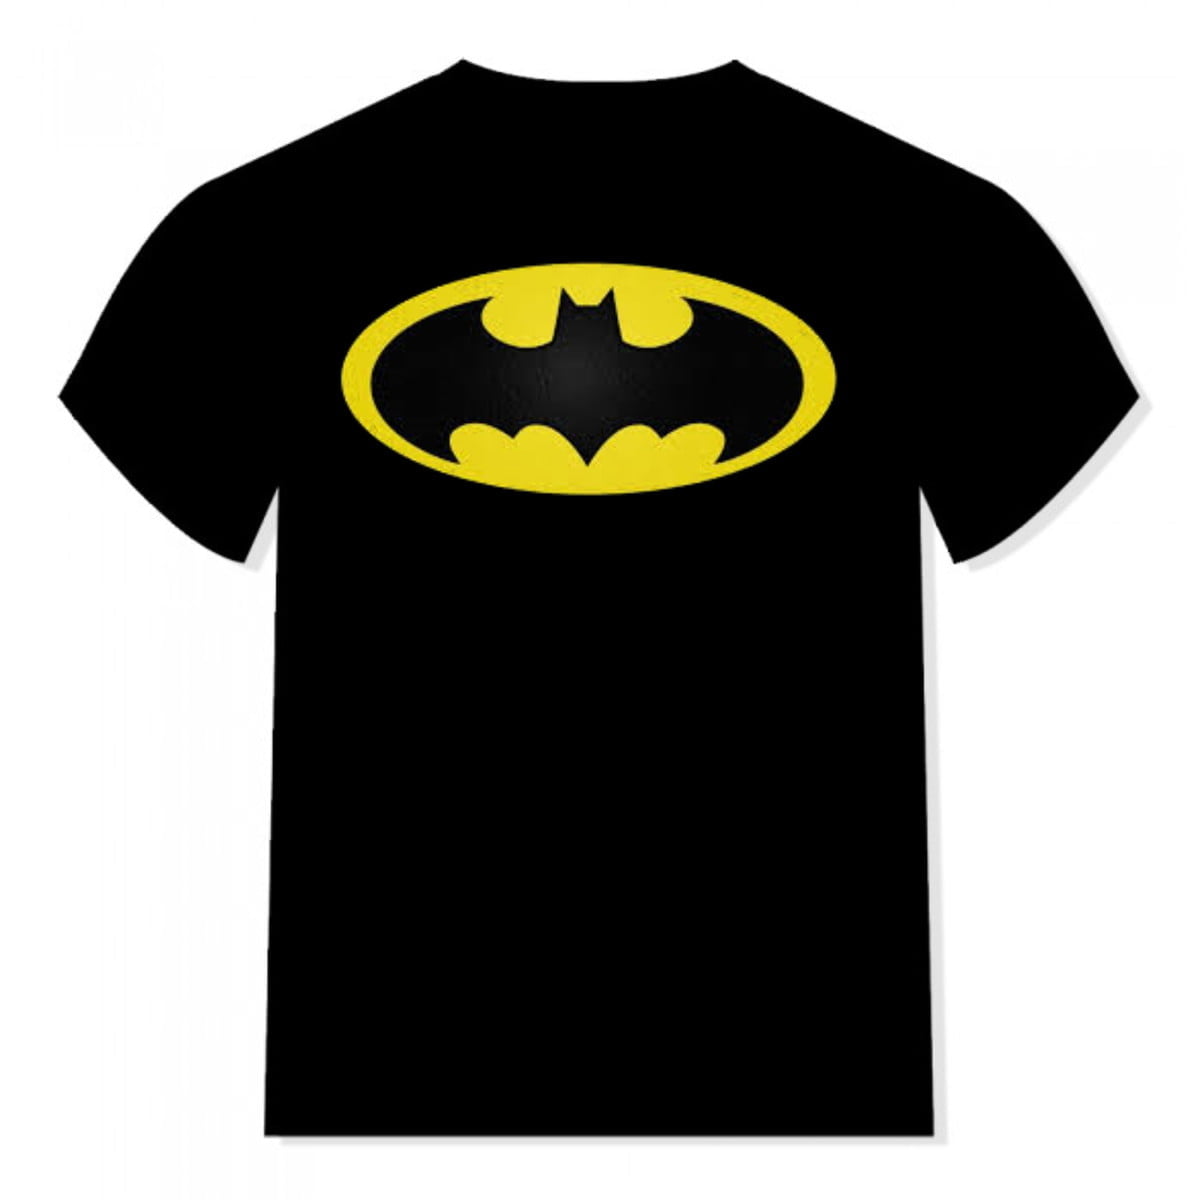 PRODUTO TESTE - Camiseta Batman - Preta - PODE EXCLUIR